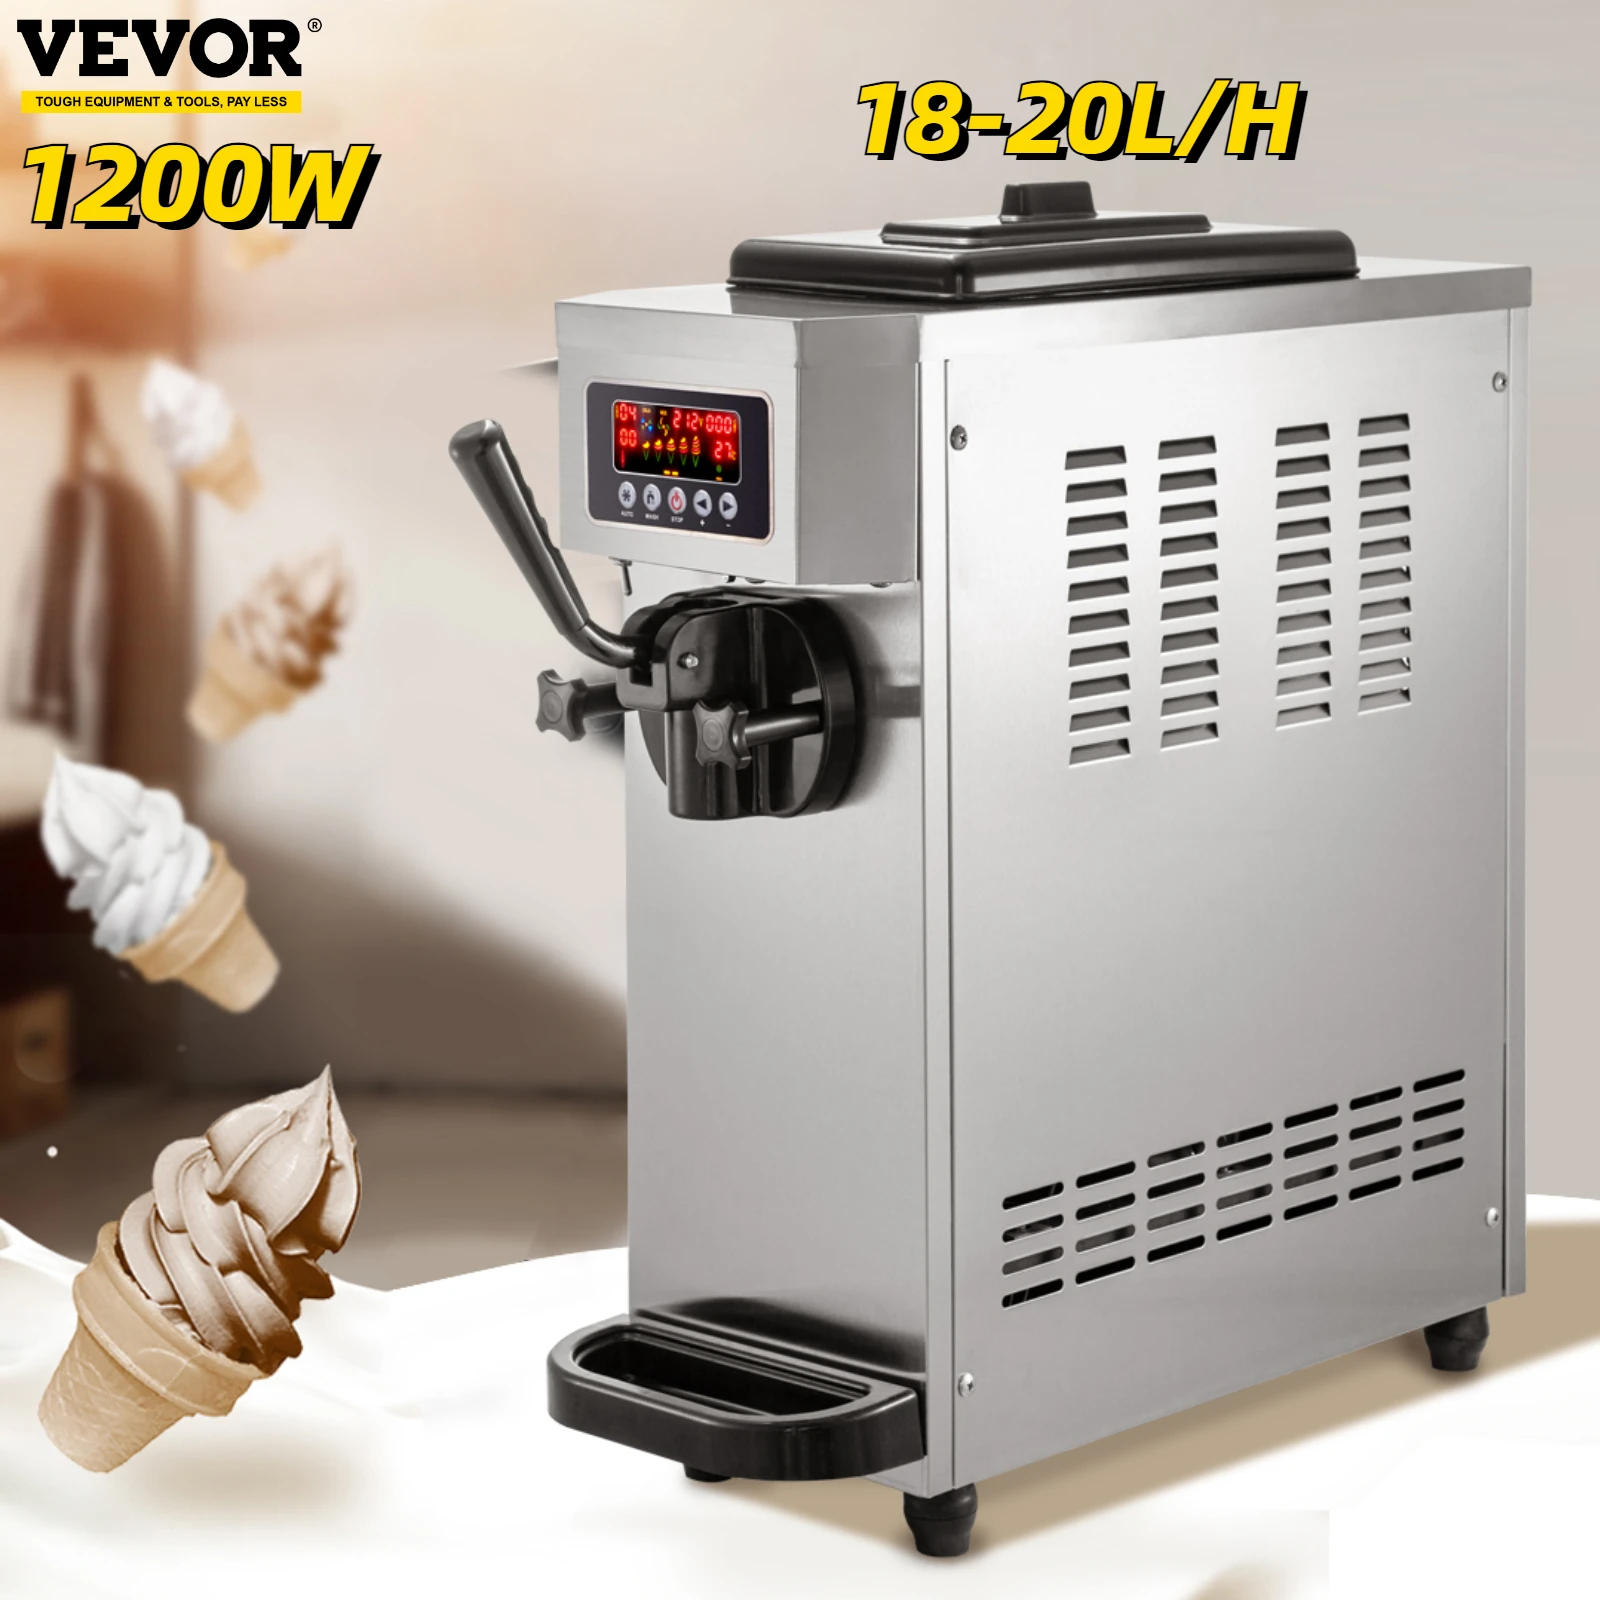 VEVOR Commercial Ice Cream Maker Single-Flavor Benchtop 1500W 20L/H Home Countertop Pre-Cooling Gelato Machine Kitchen Appliance